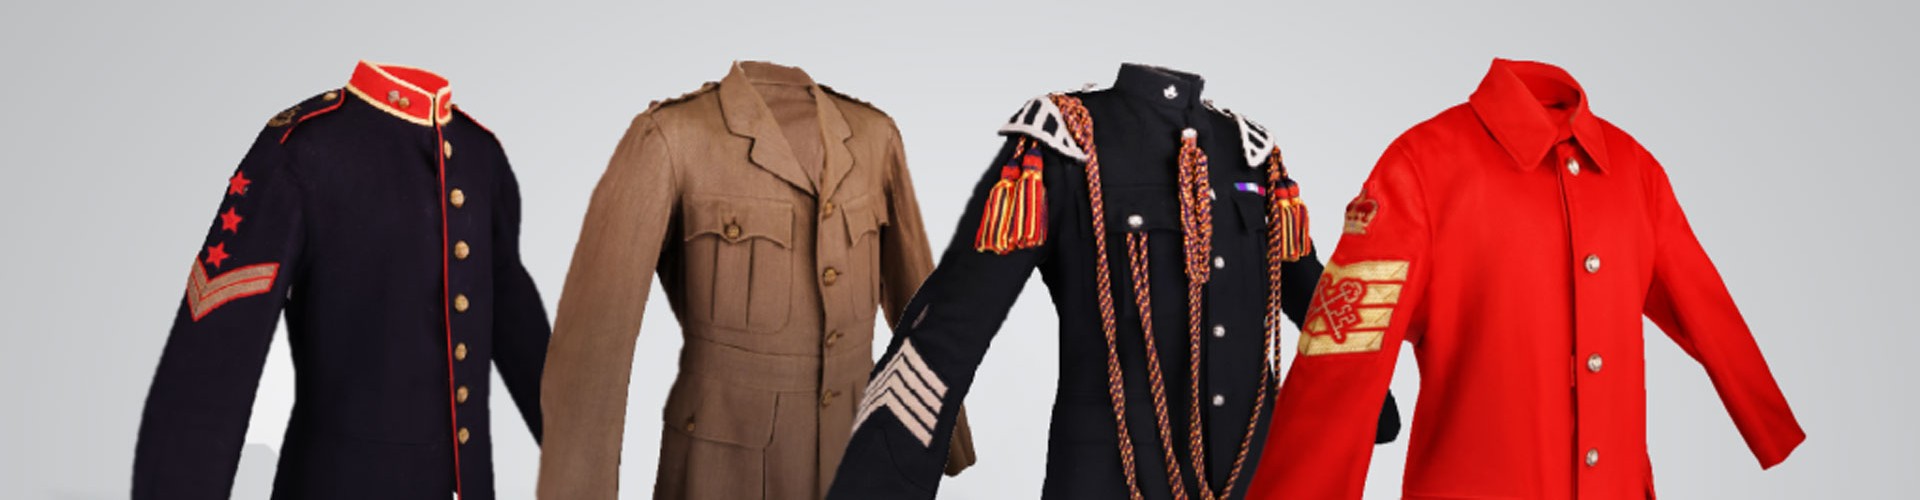 digitised cornwall museum partnership uniforms